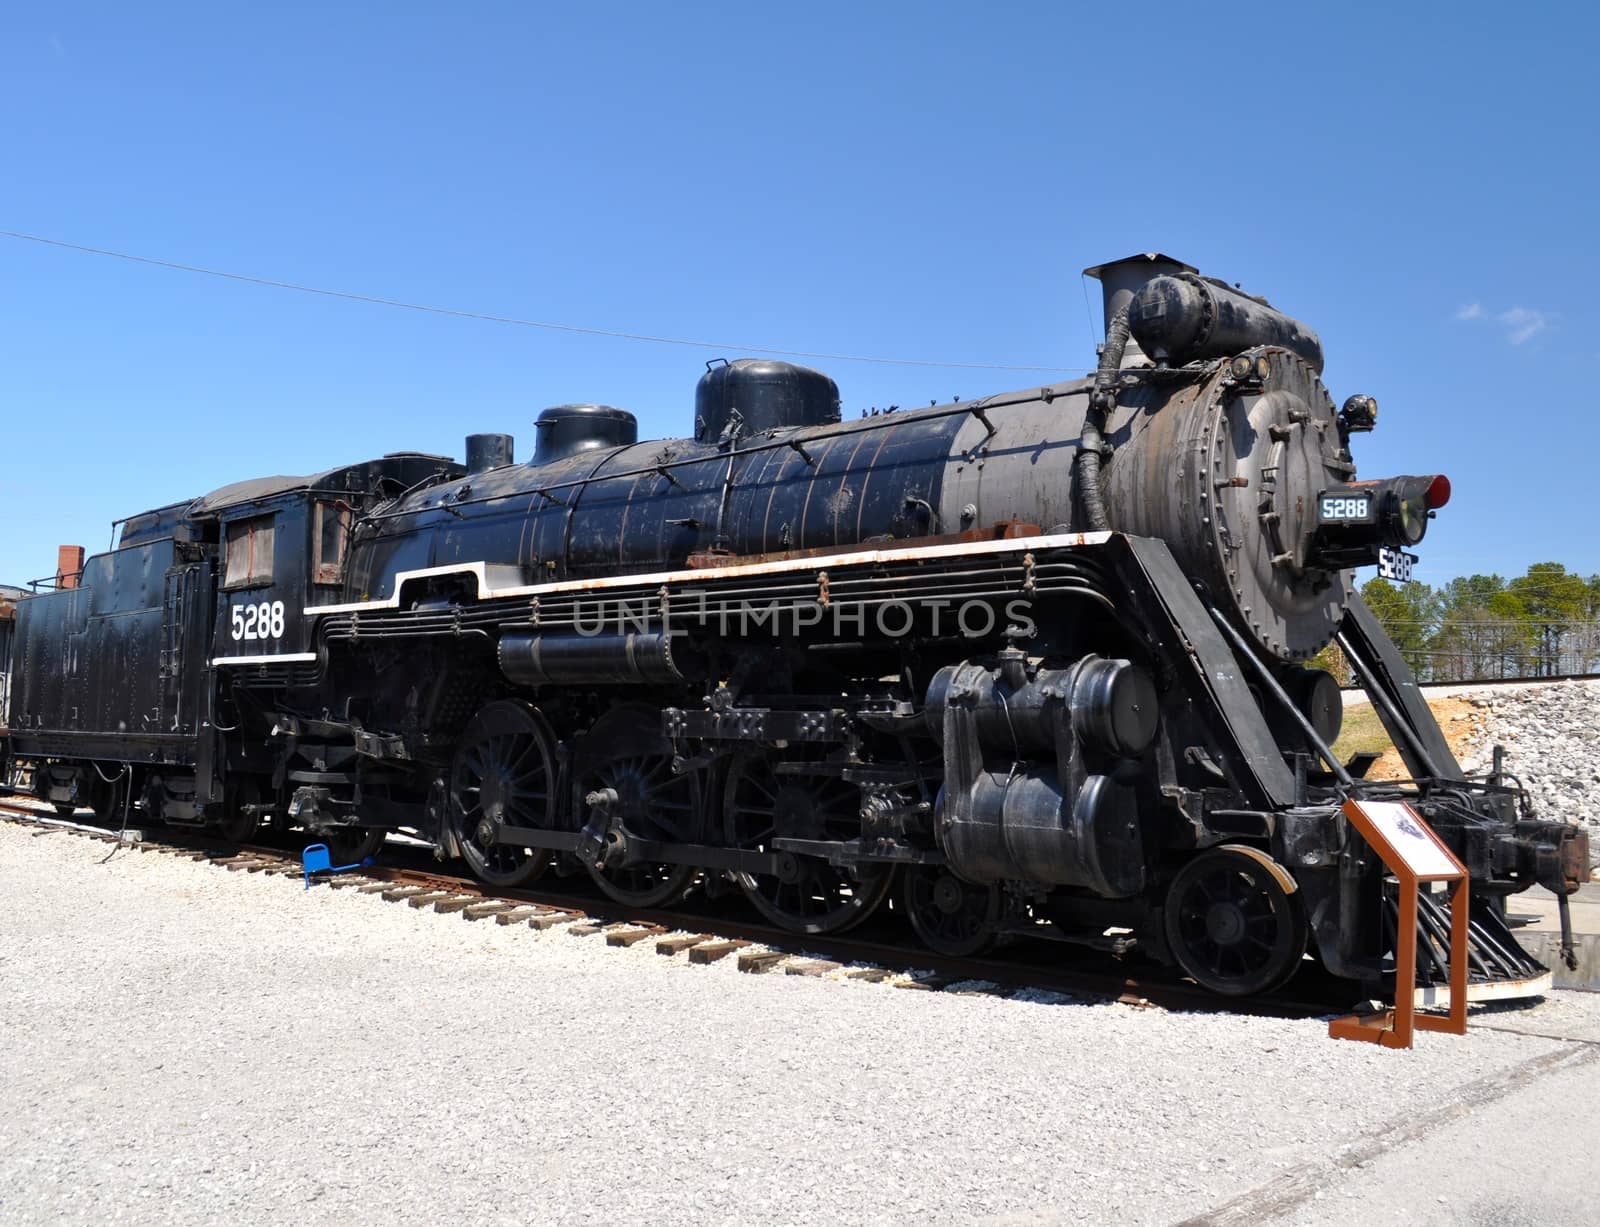 Chattanooga Locomotive by RefocusPhoto